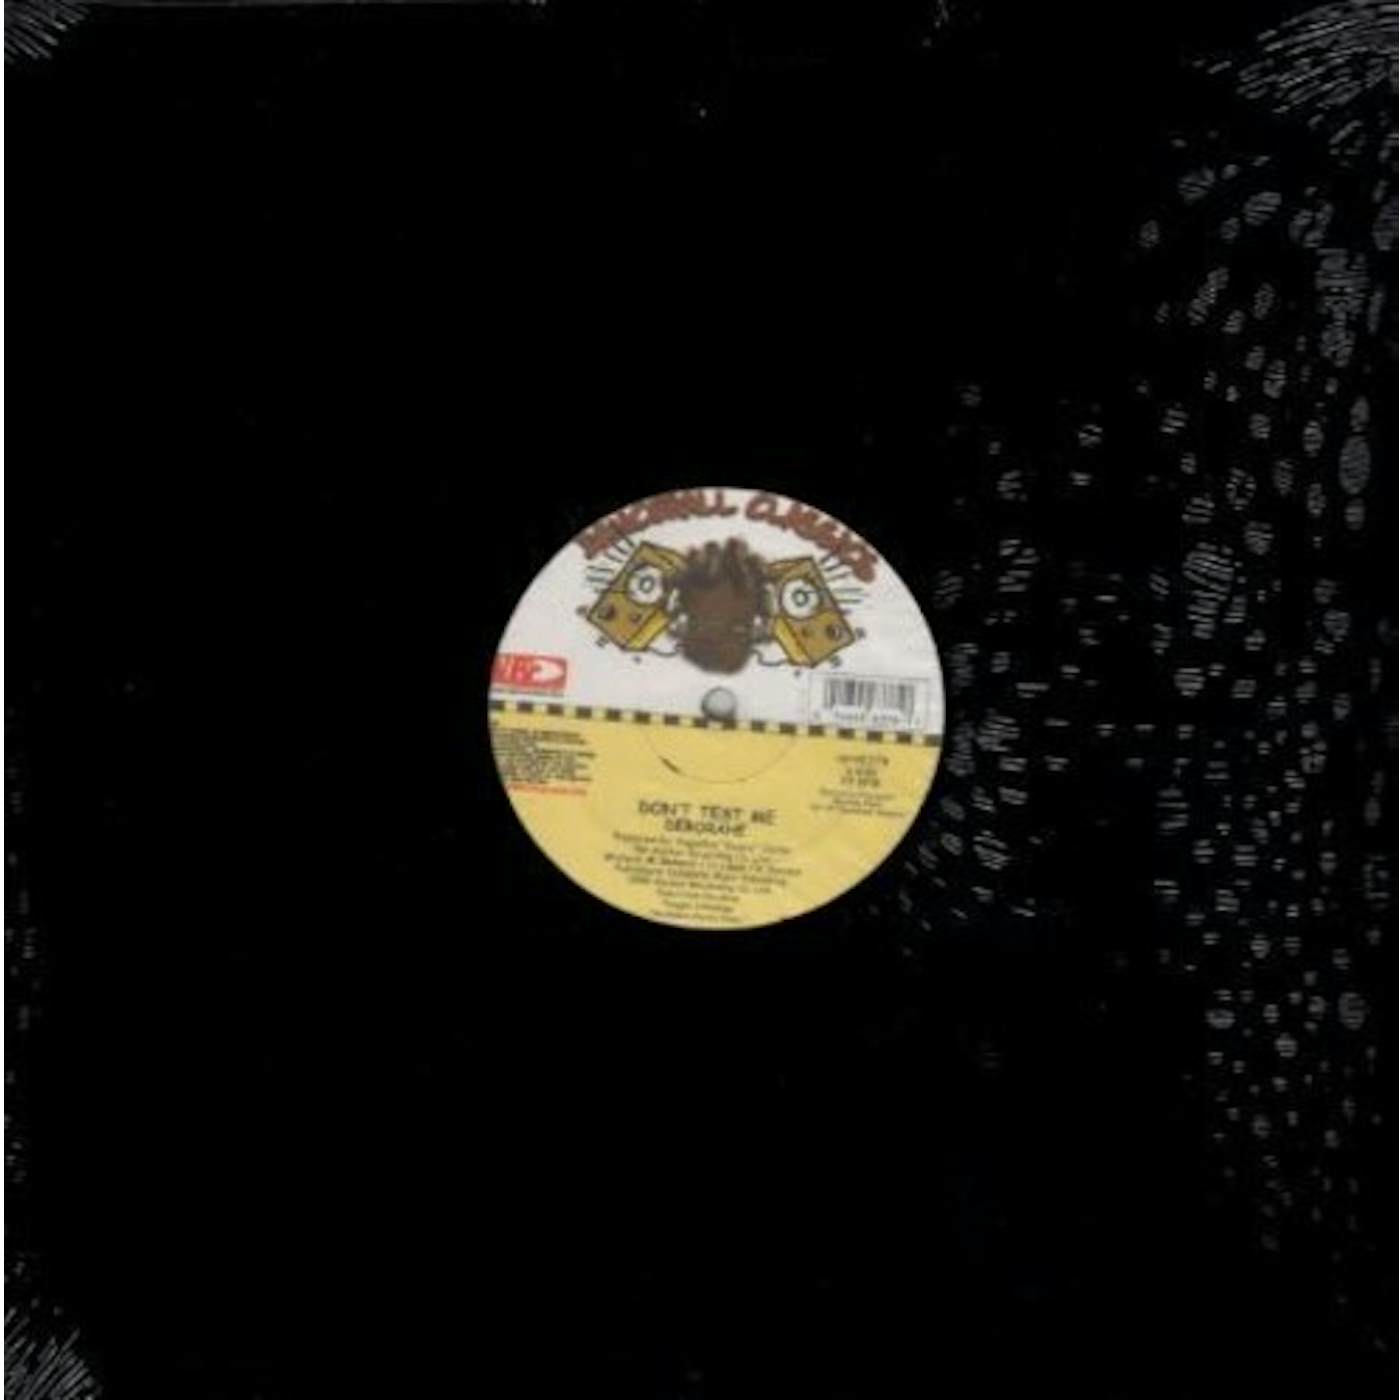 Shabba Ranks/ Deborahe Glagow Don't Test Me Vinyl Record